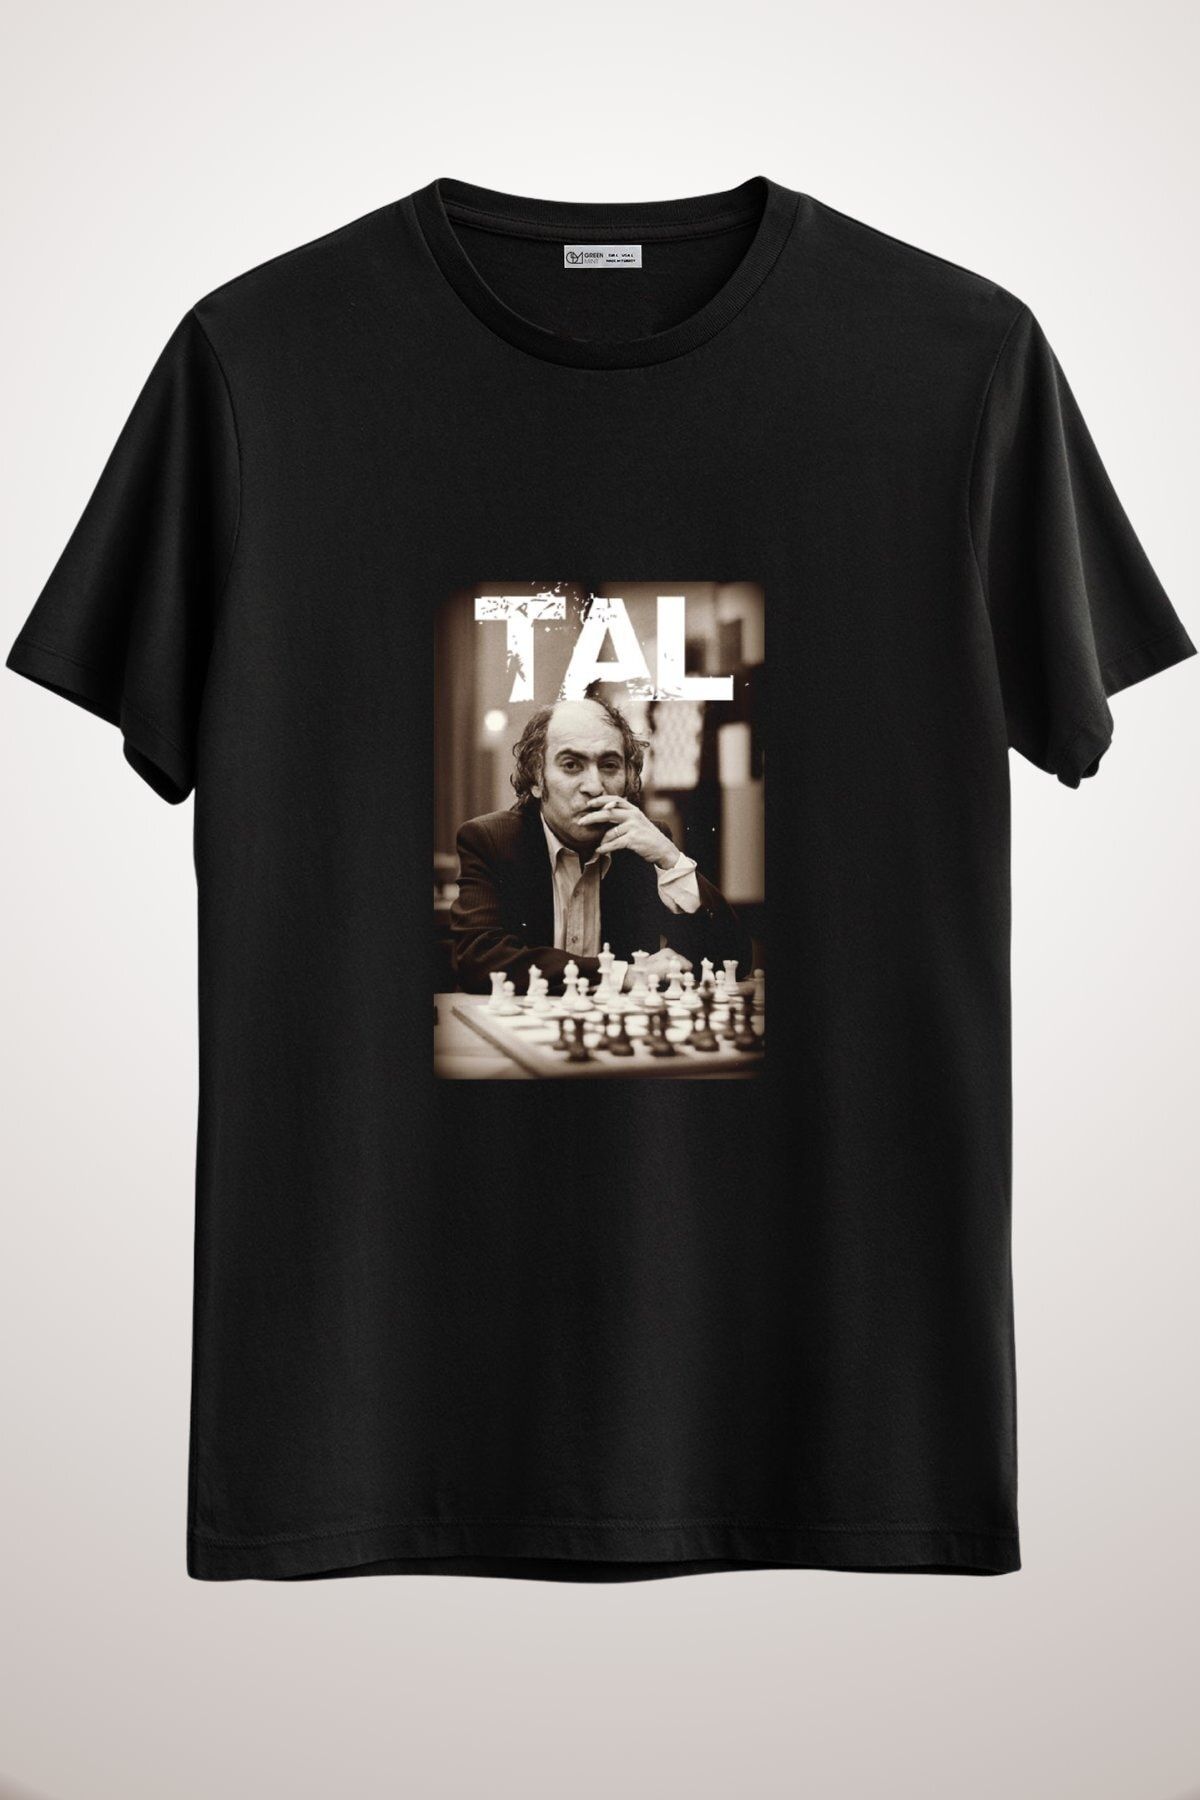 Russian Chess Grandmaster Mikhail Tal shirt